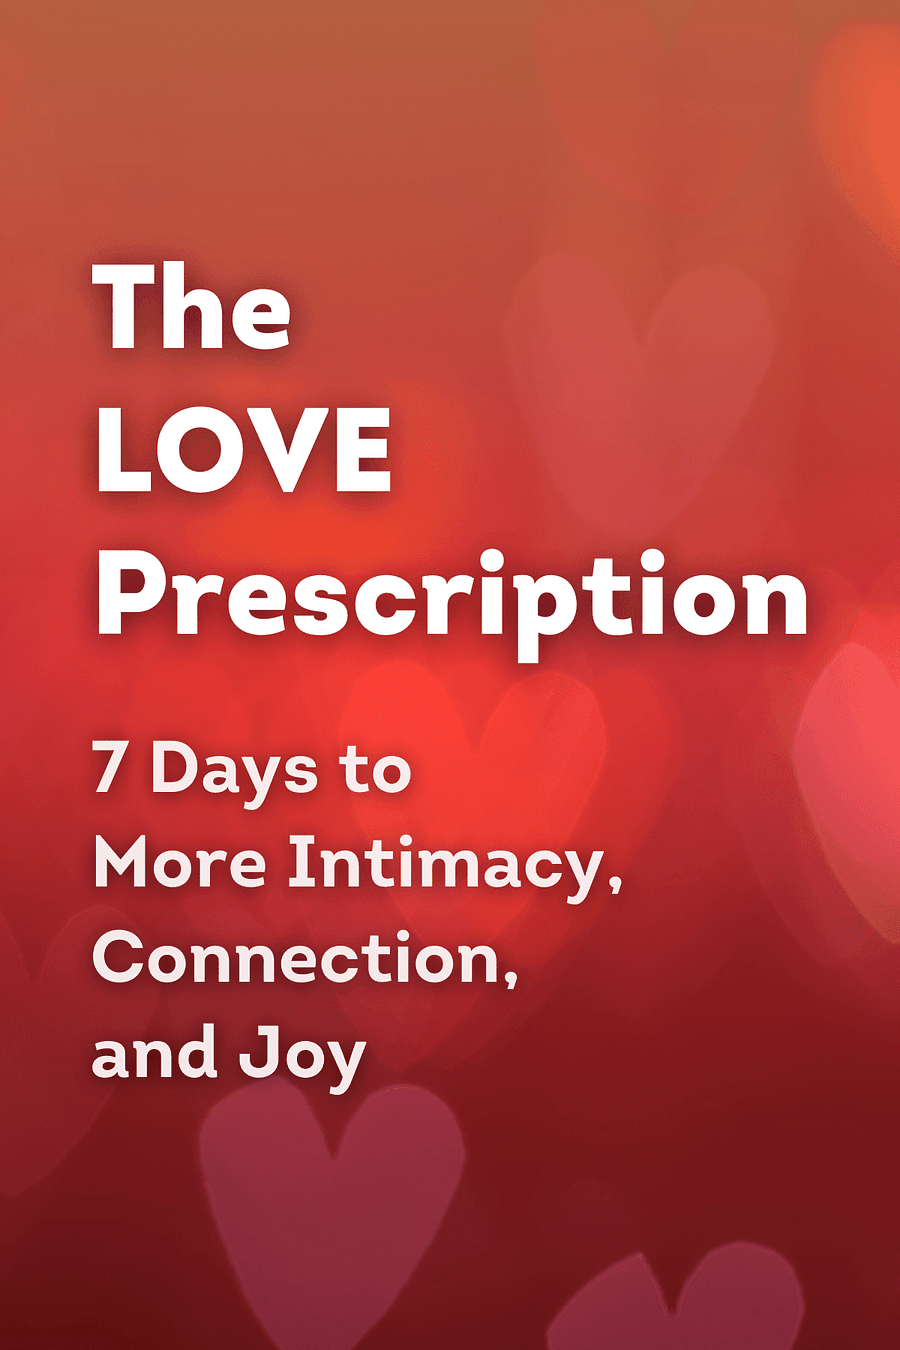 The Love Prescription by John Gottman, Julie Schwartz Gottman - Book Summary